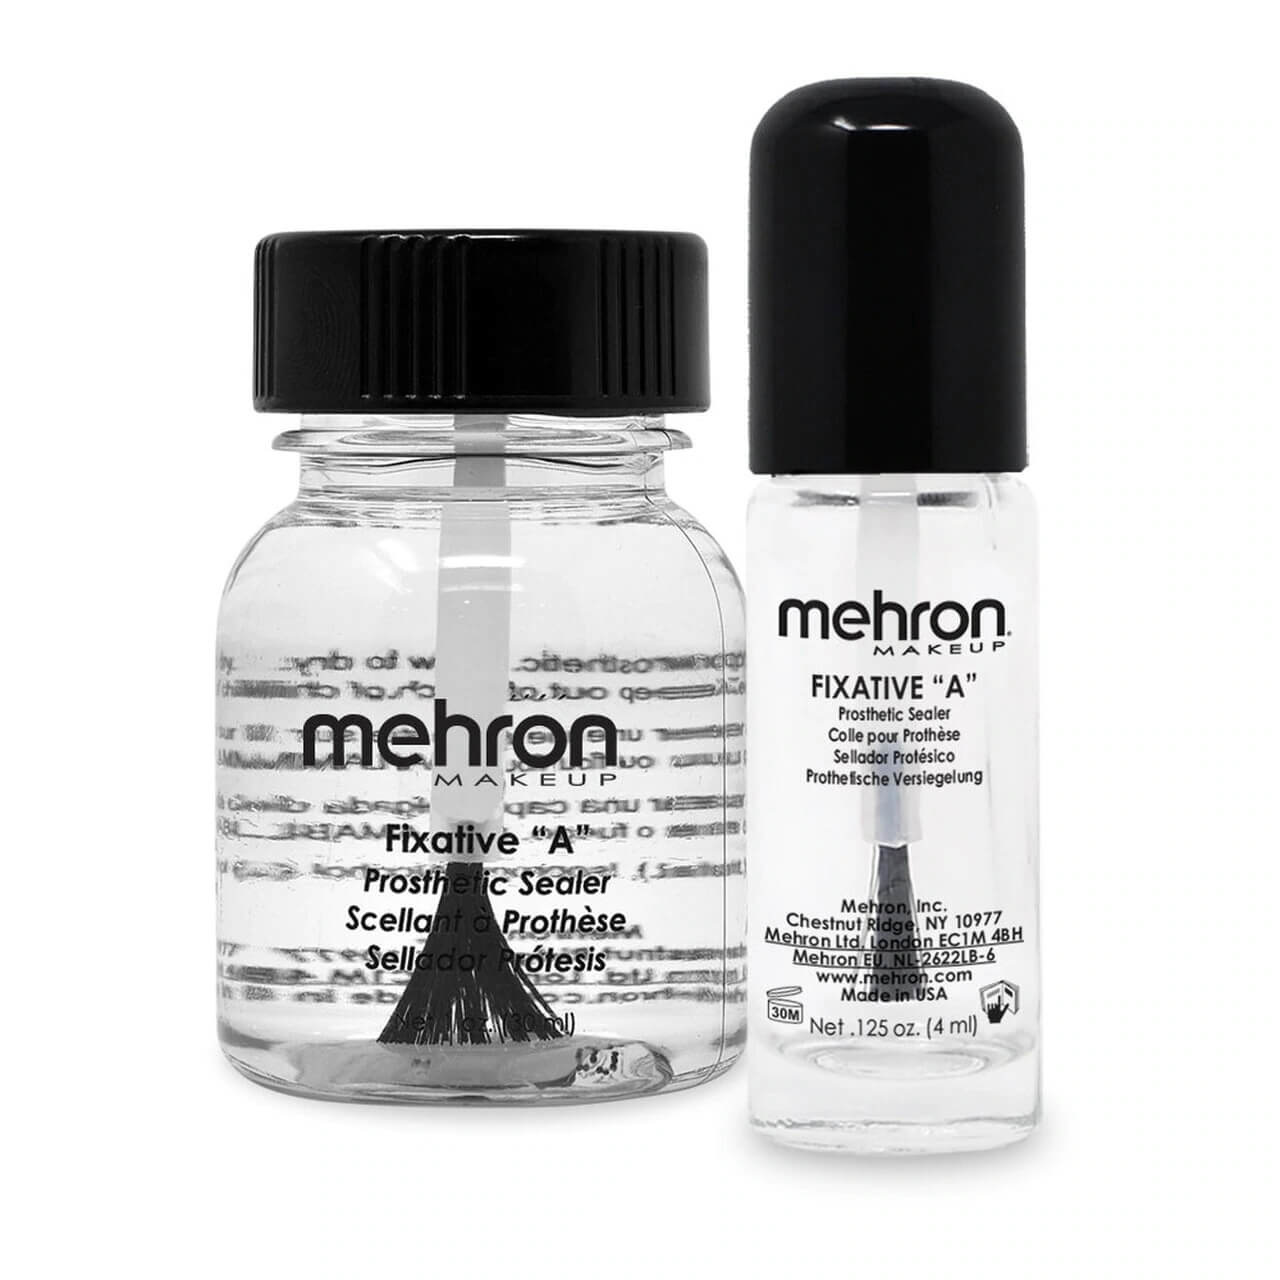 Mehron Makeup Special FX Makeup Kit for Halloween, Horror, Cosplay